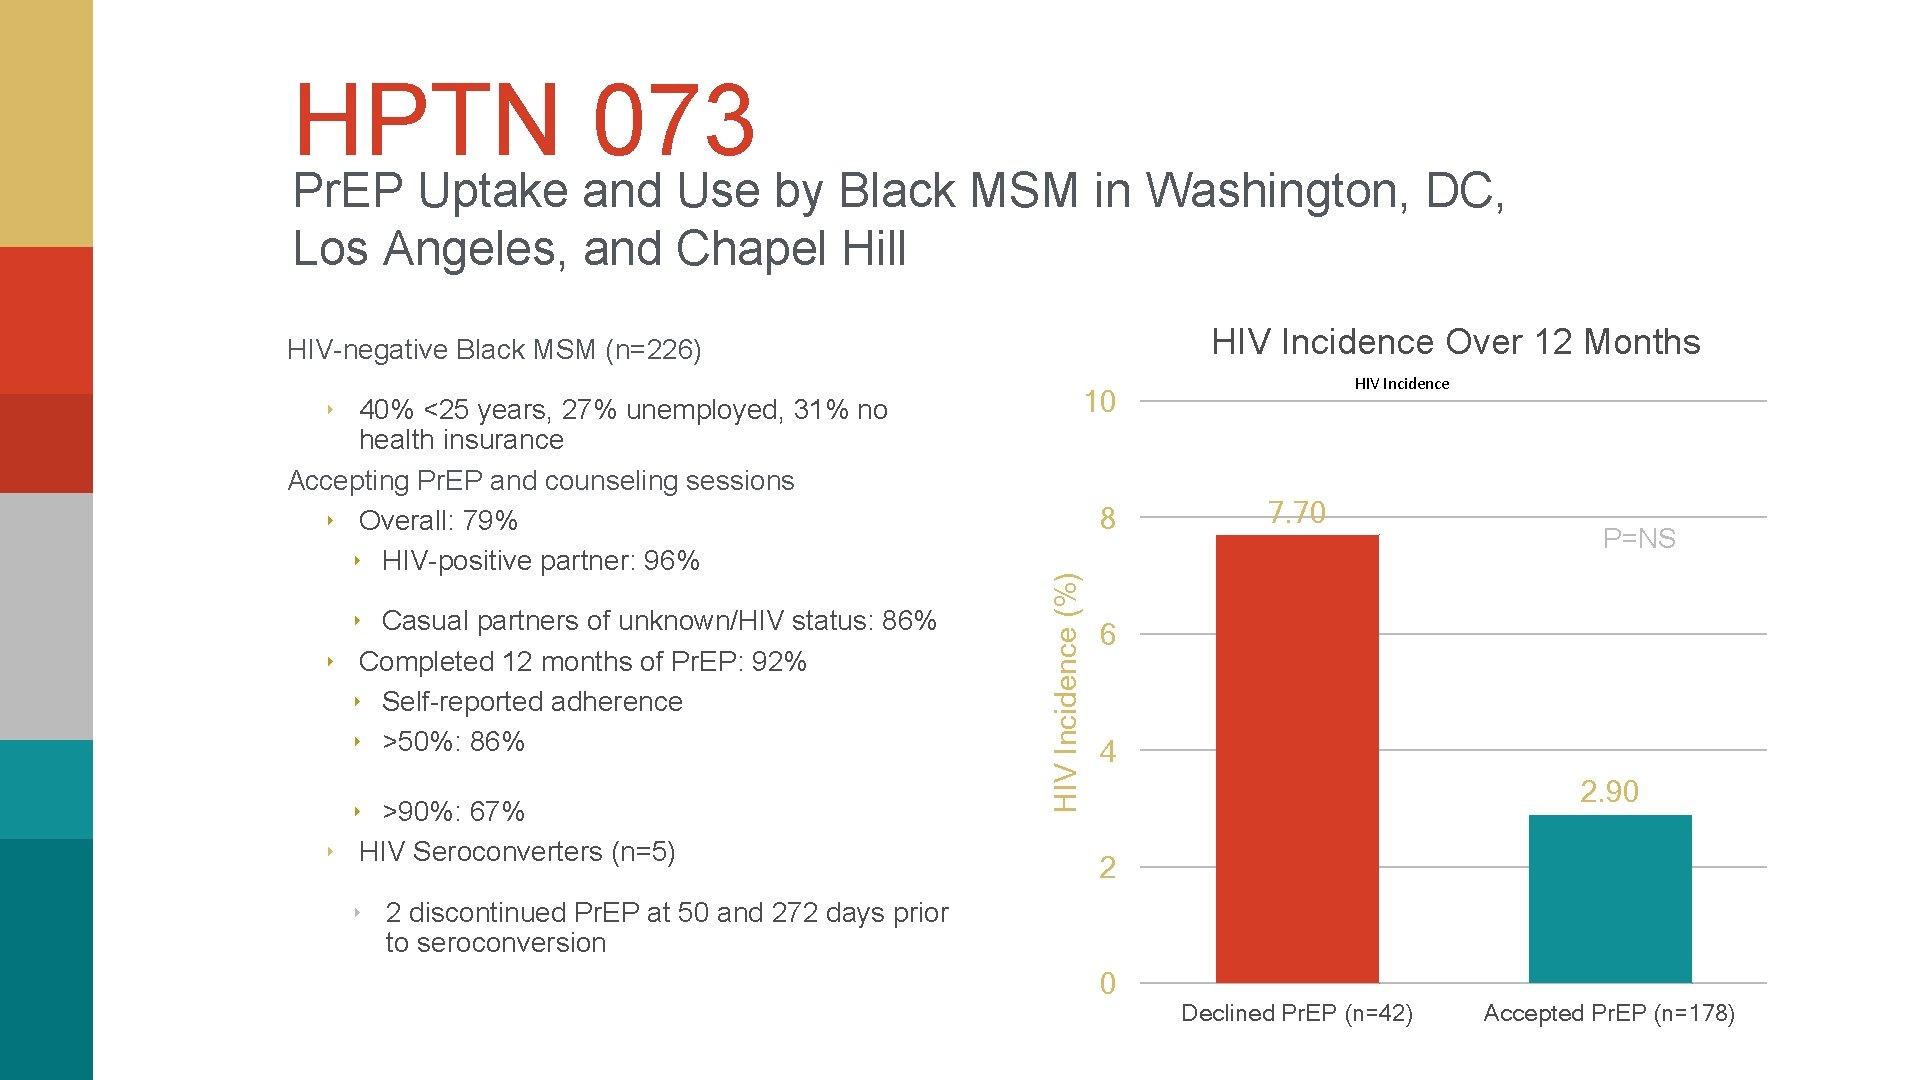 HPTN 073 Pr. EP Uptake and Use by Black MSM in Washington, DC, Los